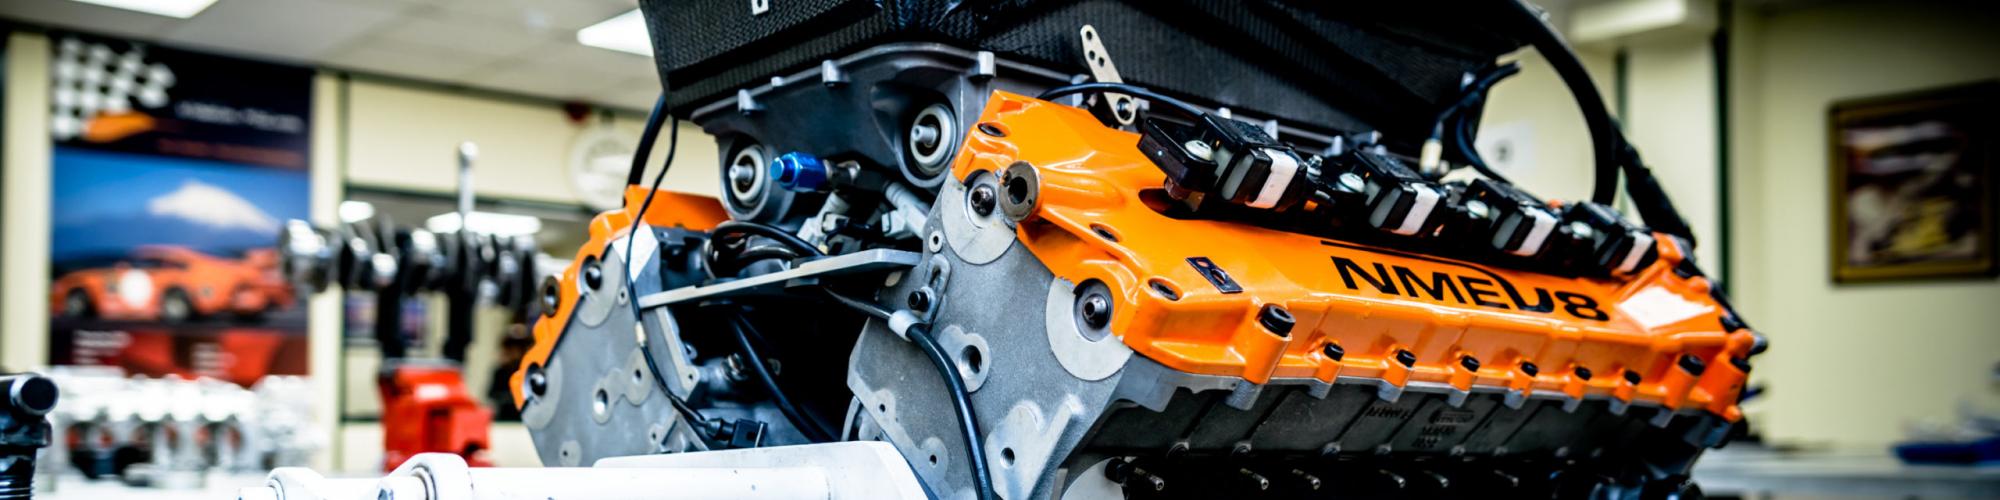 Nicholson McLaren Engines cover image